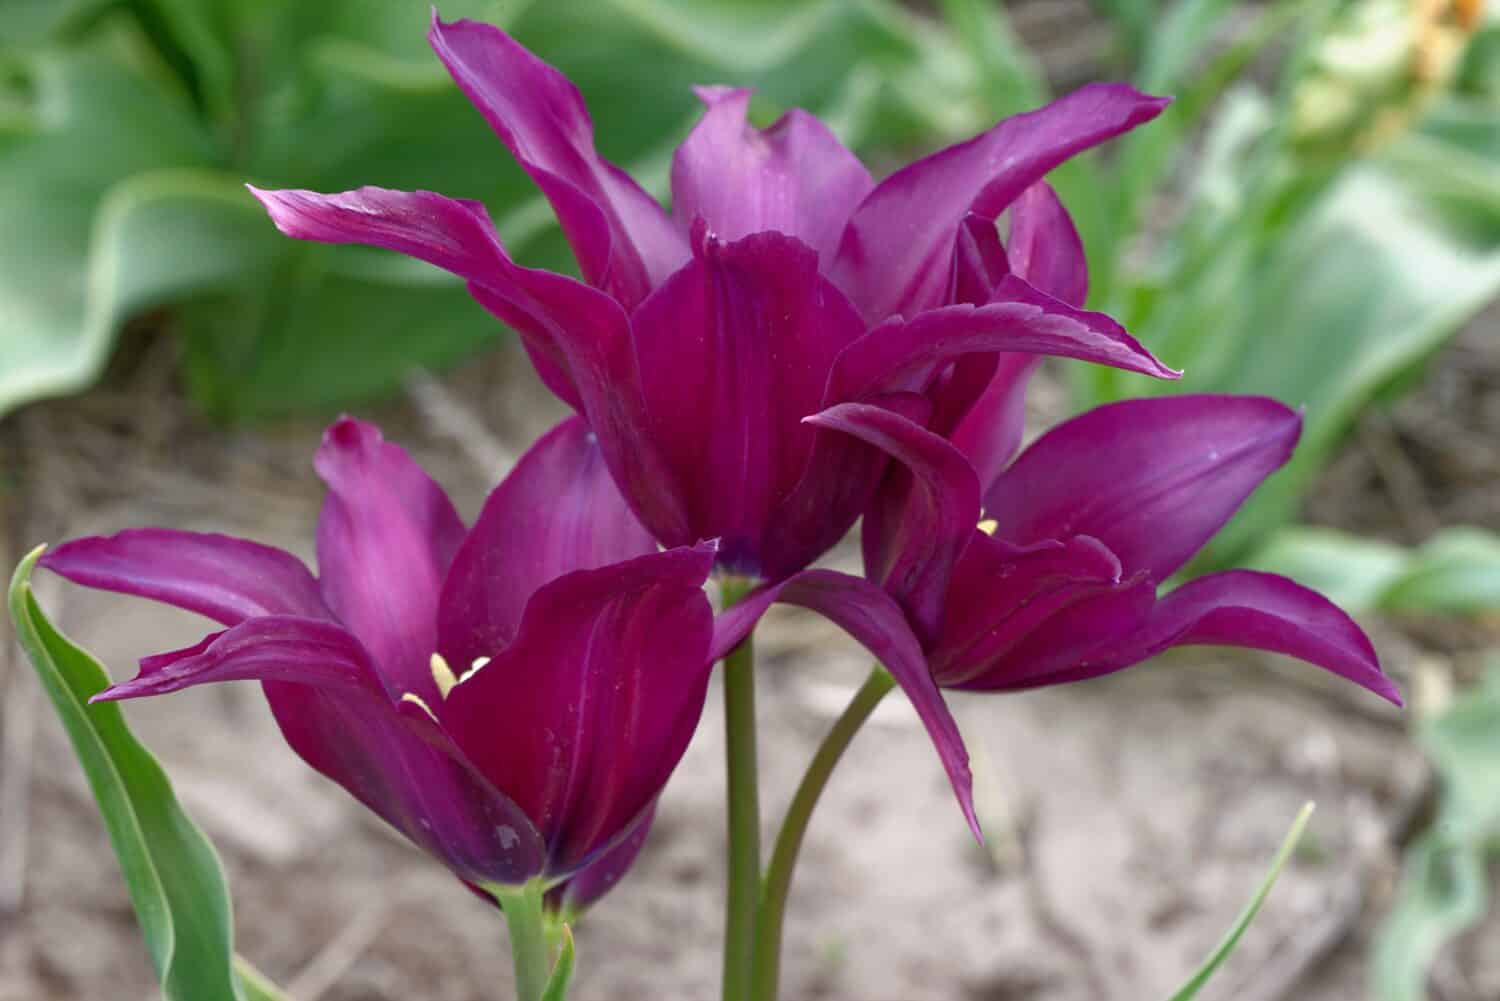 Tulipa 'Burgundy' is a tulip with purple flowers